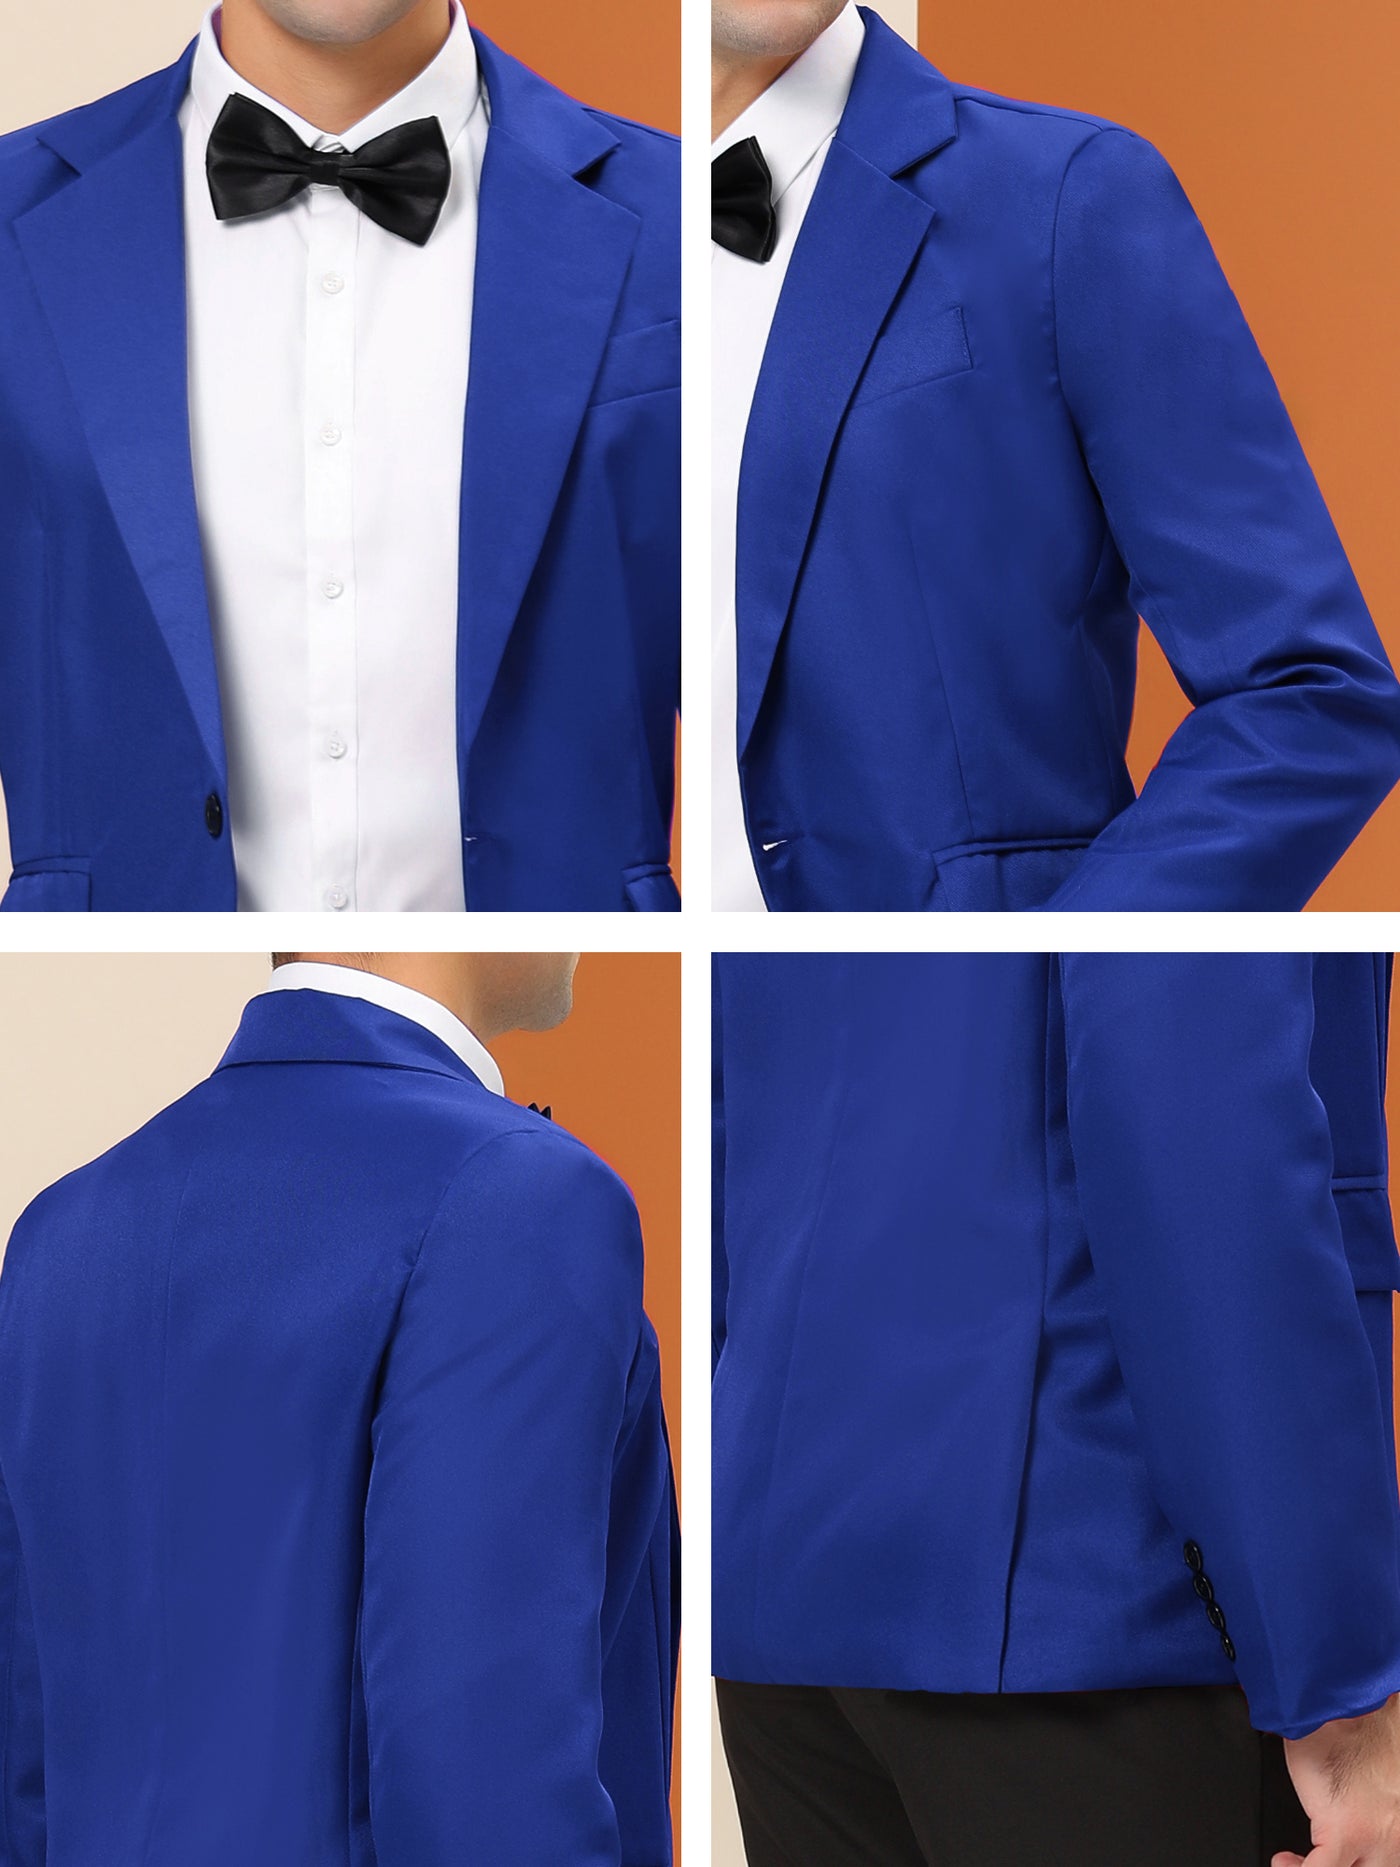 Bublédon Men's Prom Blazer Slim Fit Lightweight One Button Sport Coat Suit Jackets